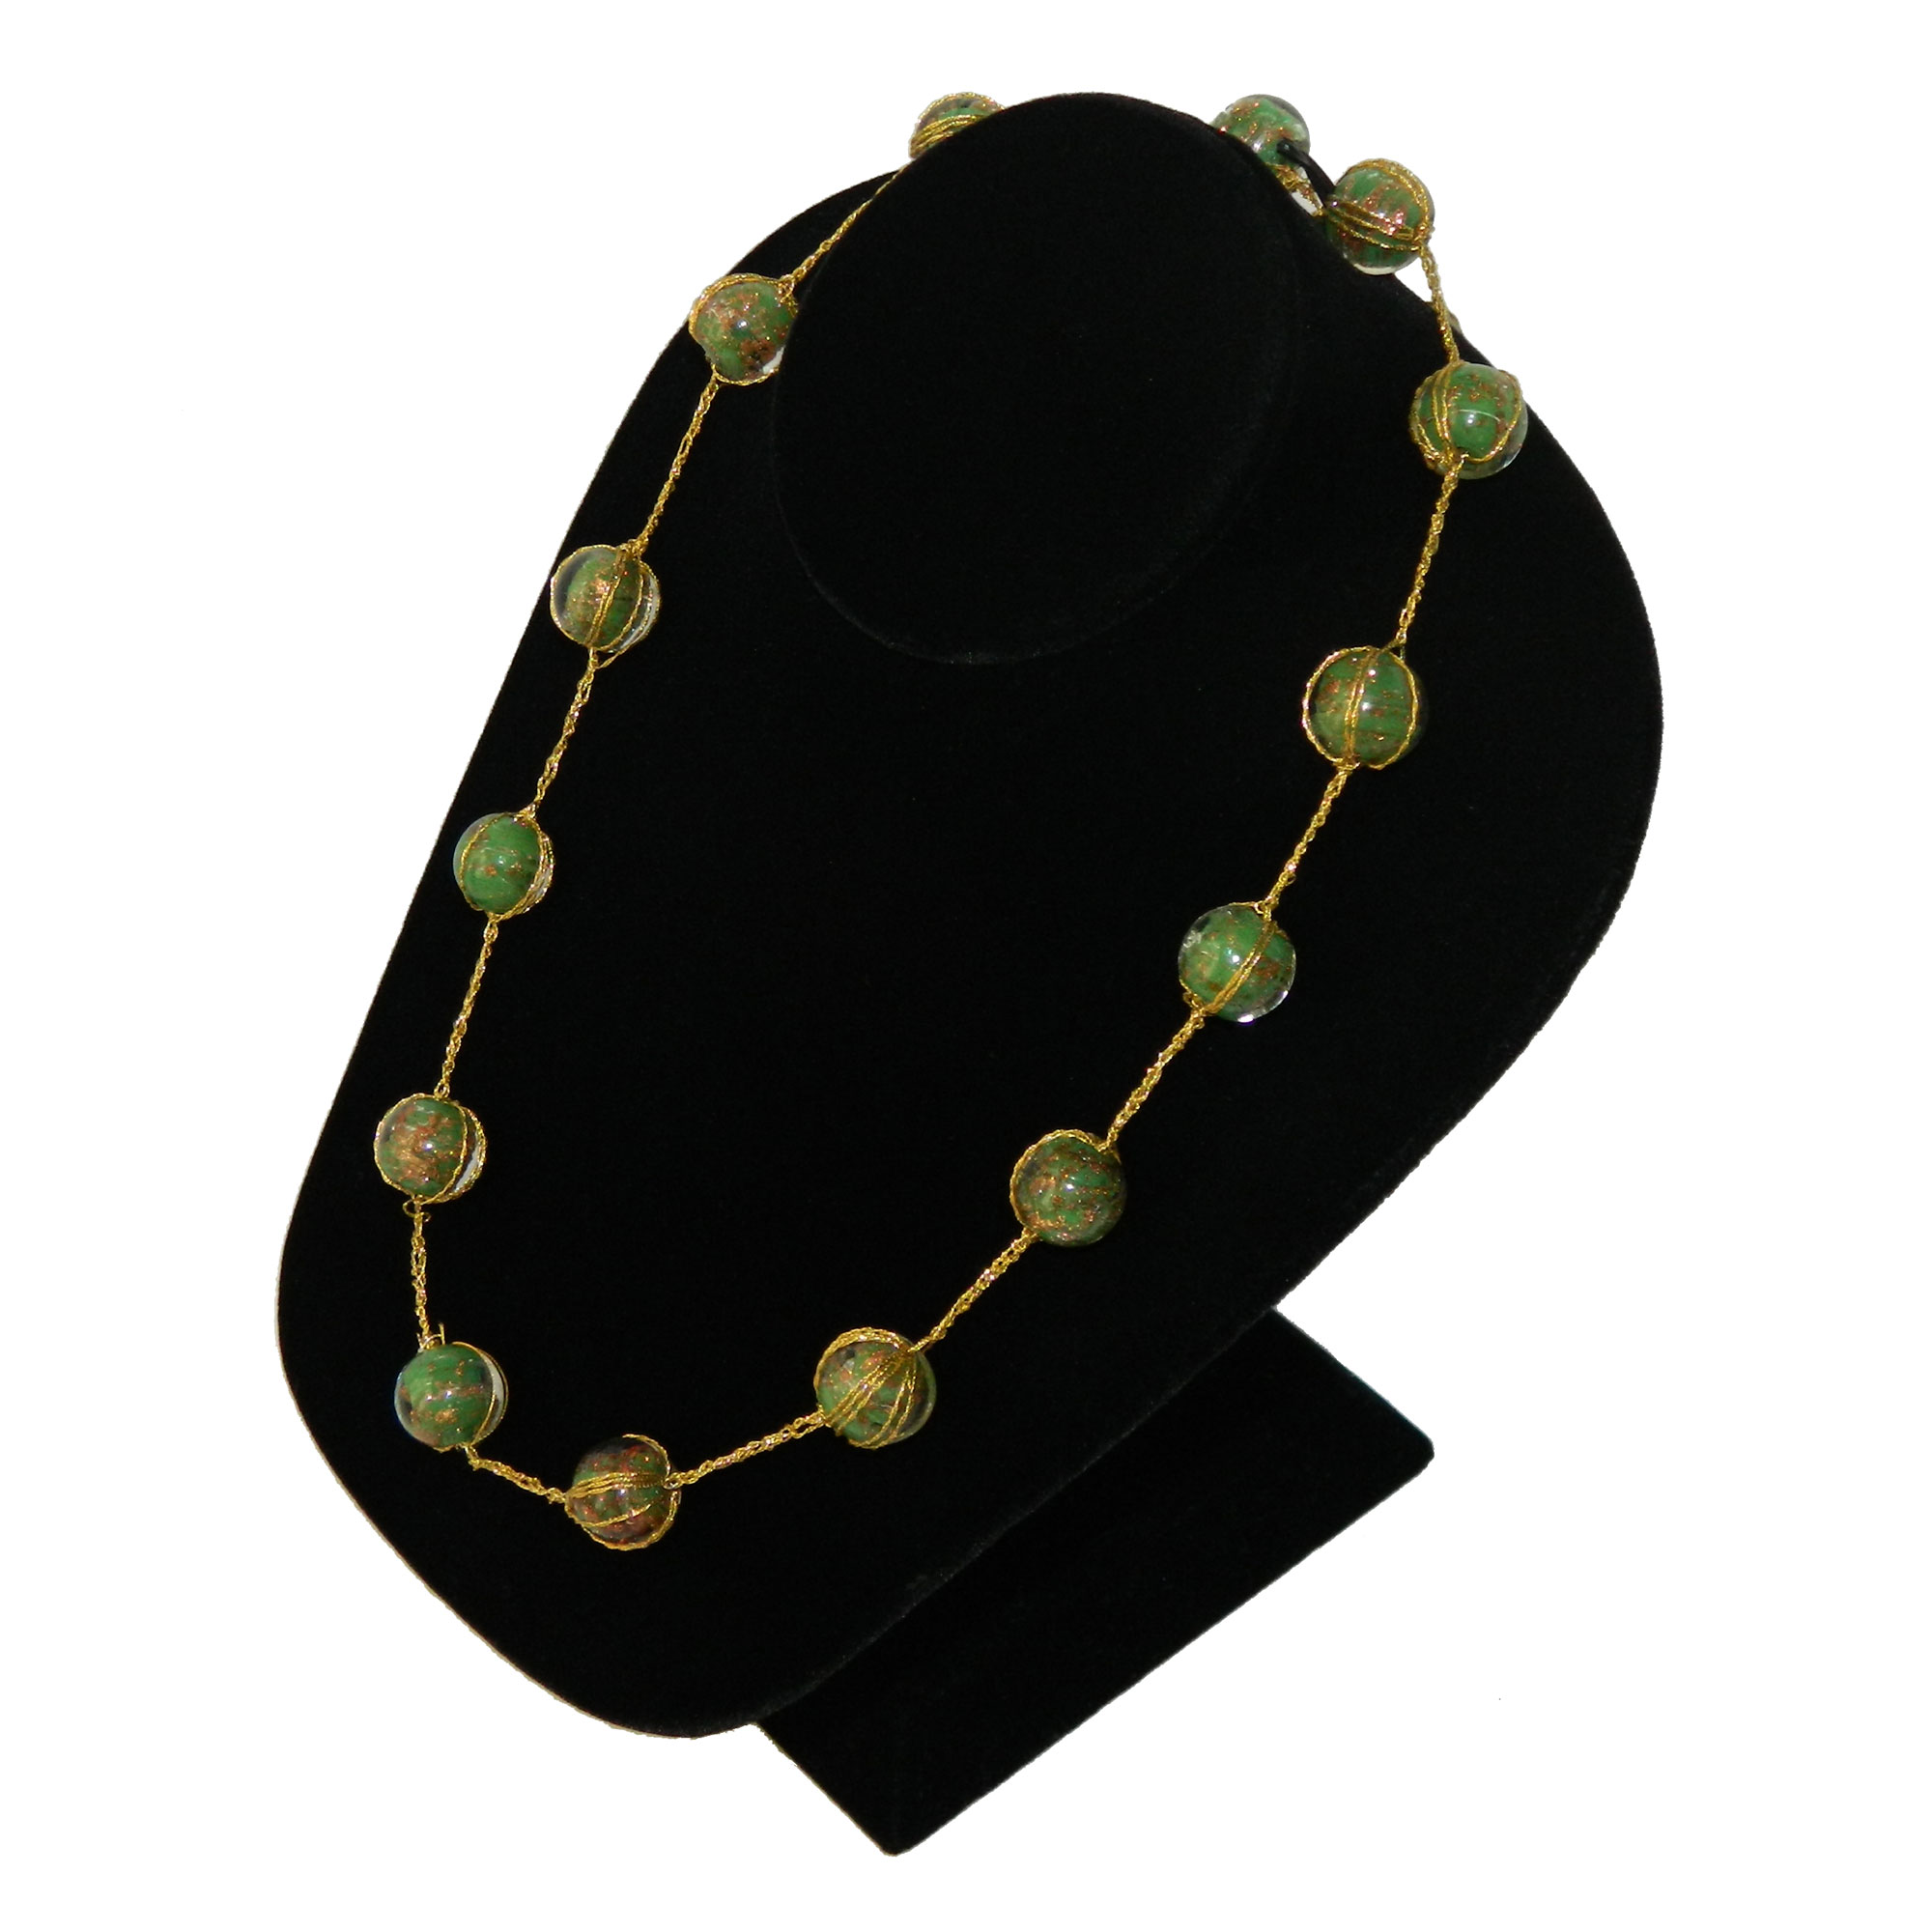 Venetian glass necklace